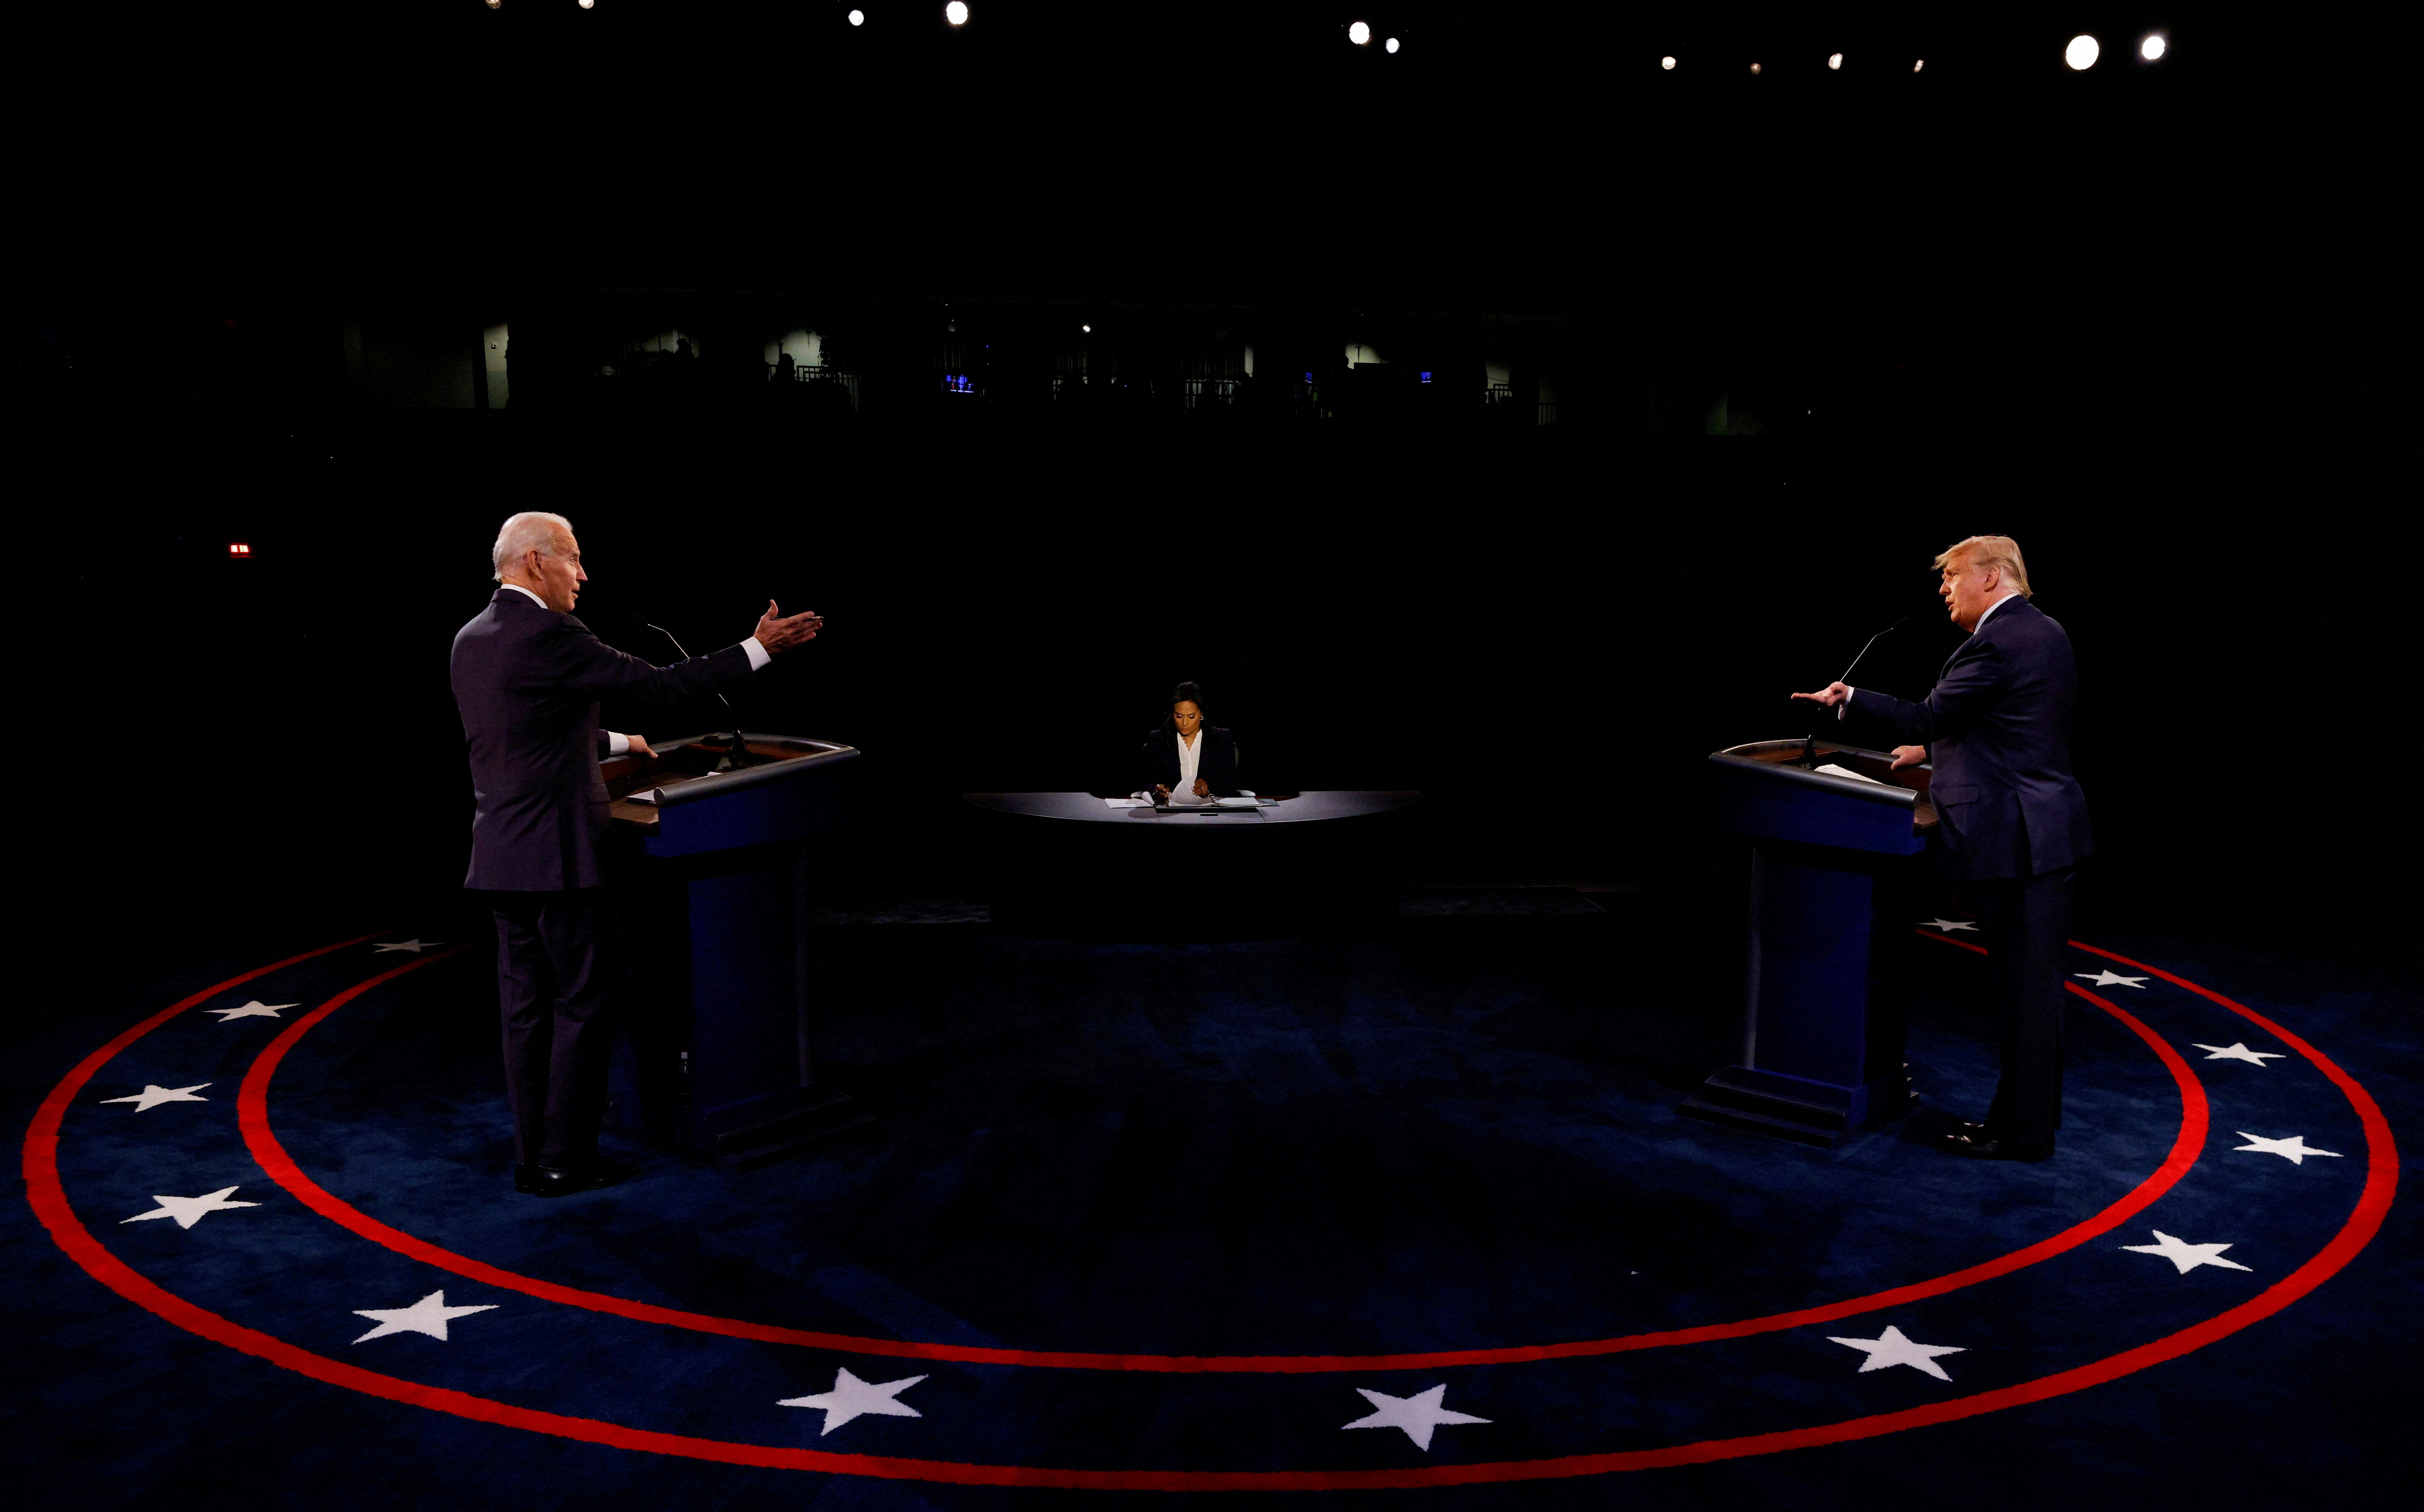 Democratic presidential nominee Biden and President Trump participate in their second debate in Nashville